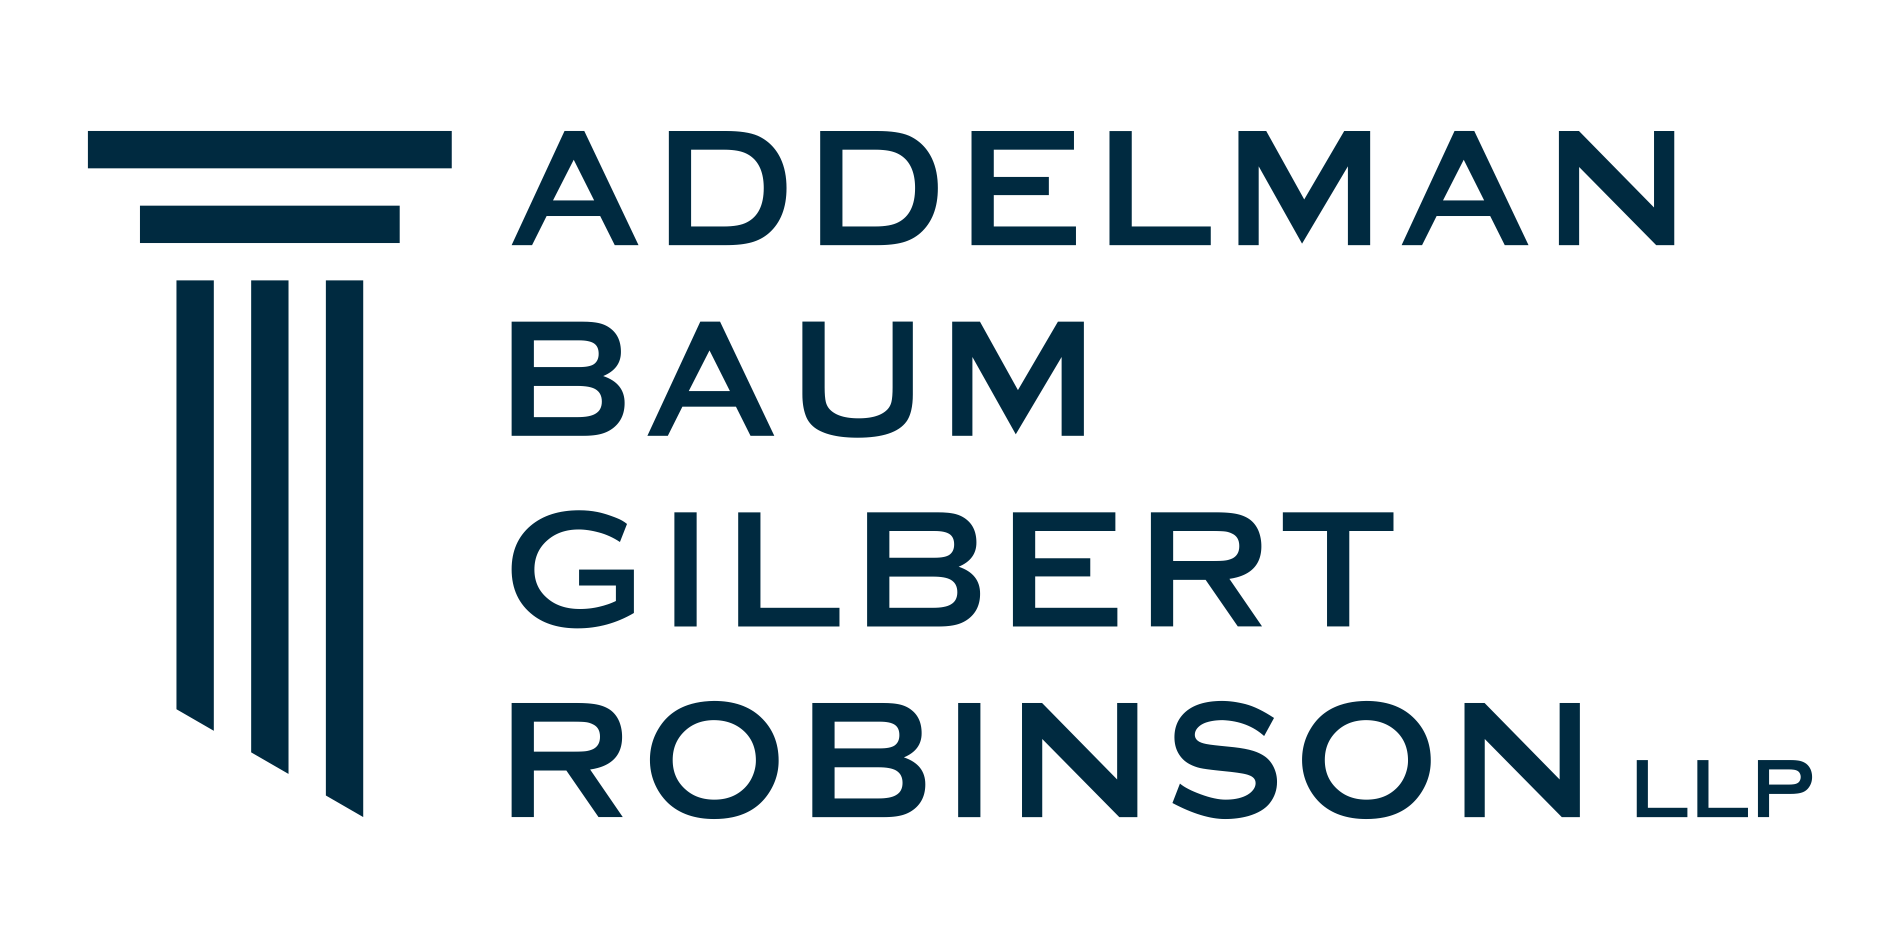 Addelman Baum Gilbert Robinson